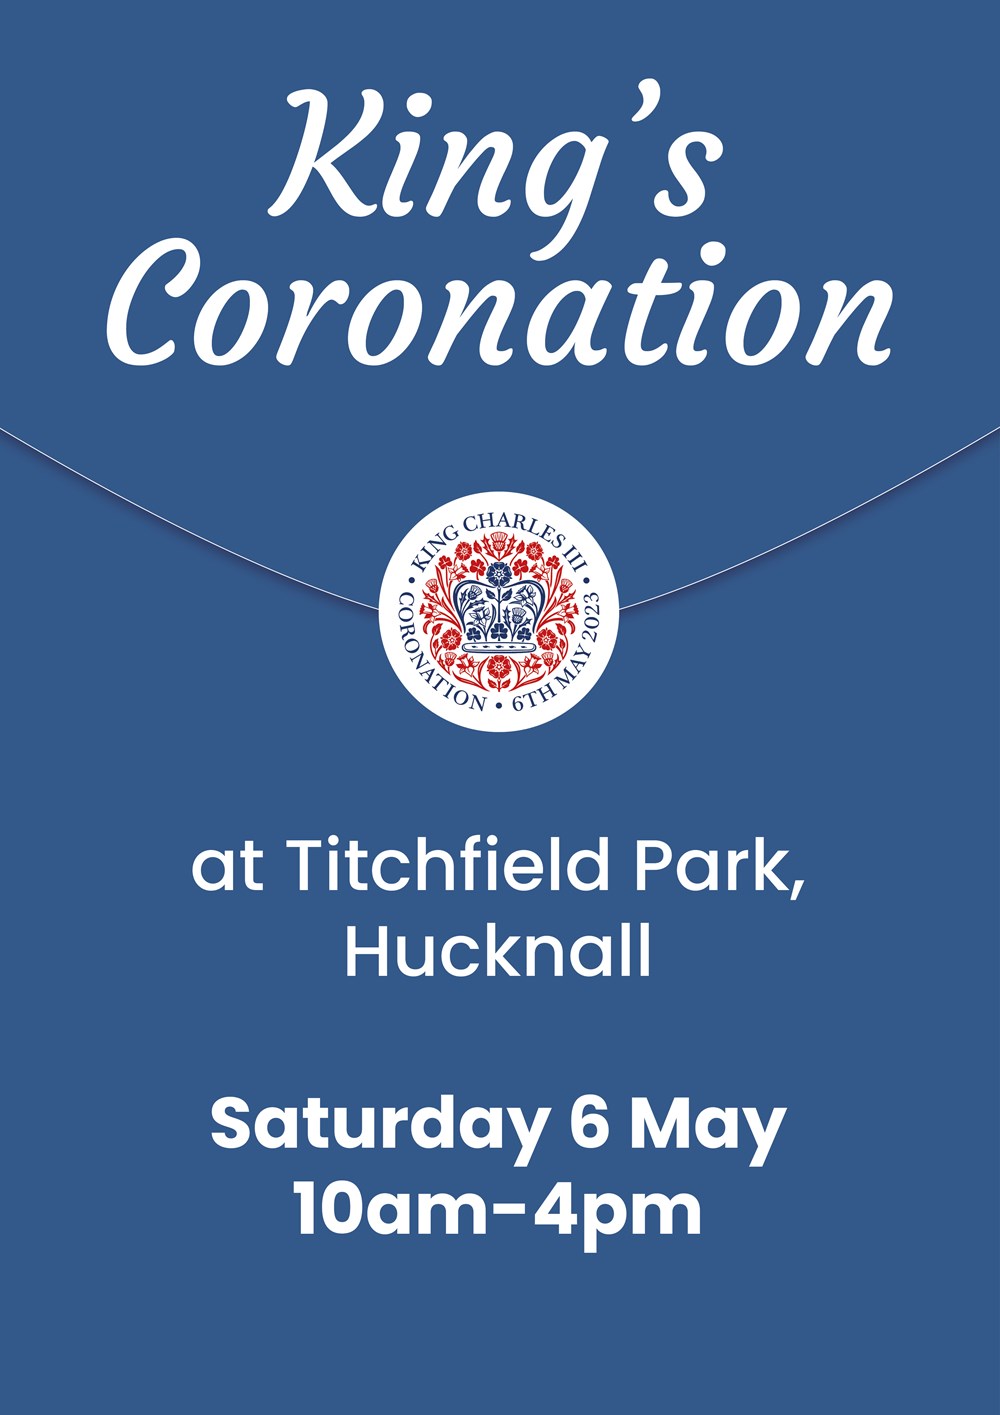 King's Coronation on Saturday 6 May at Titchfield Park 